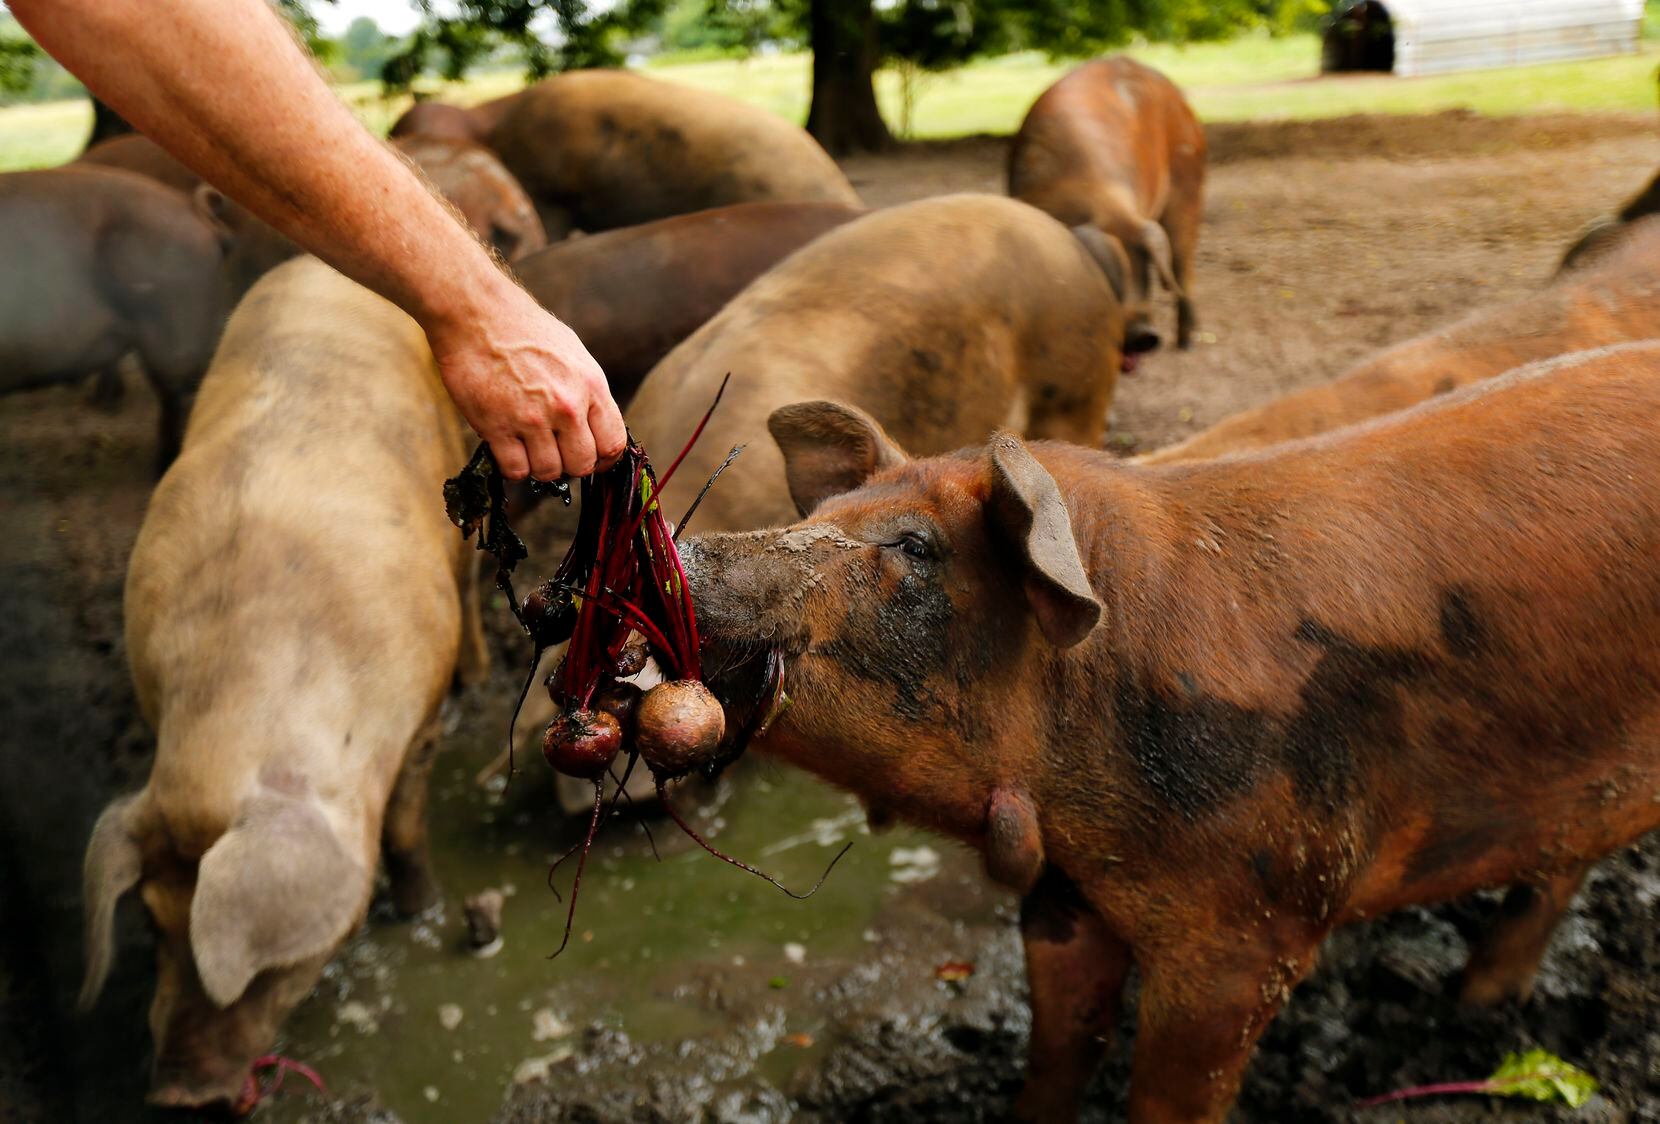 Farmer Thomas Locke feeds beets to his hogs on the Bois d'Arc farm in Allens Chapel, Texas, Thursday, June 29, 2017. 